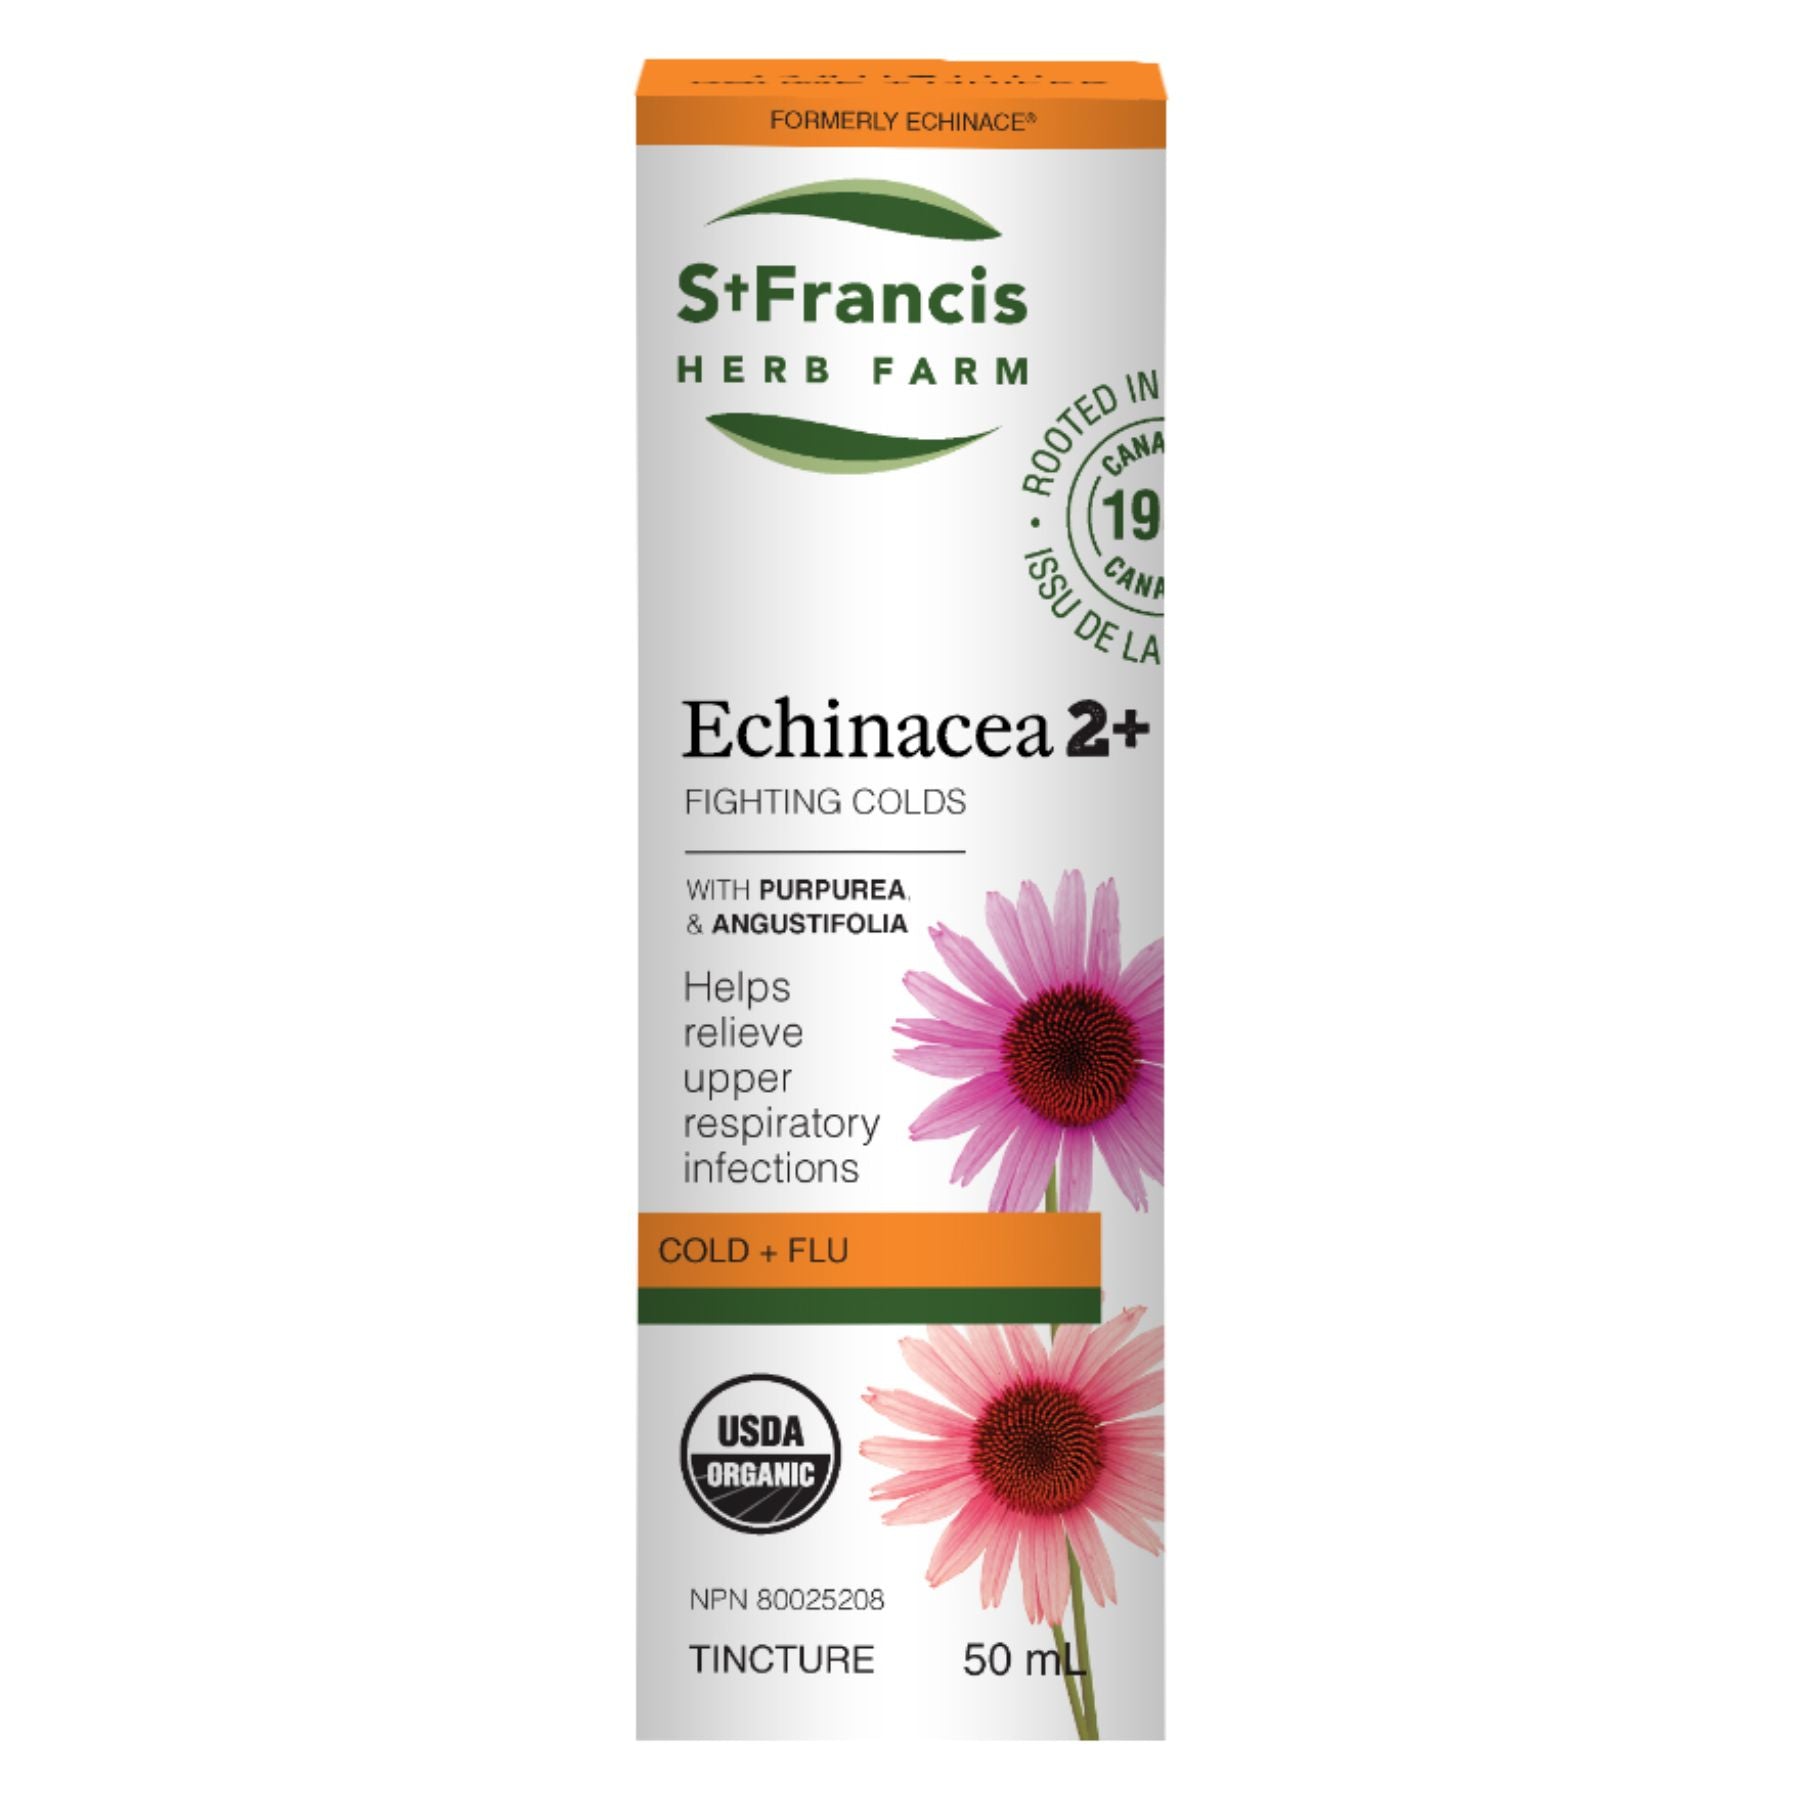 St. Francis Echinacea+ 50ml